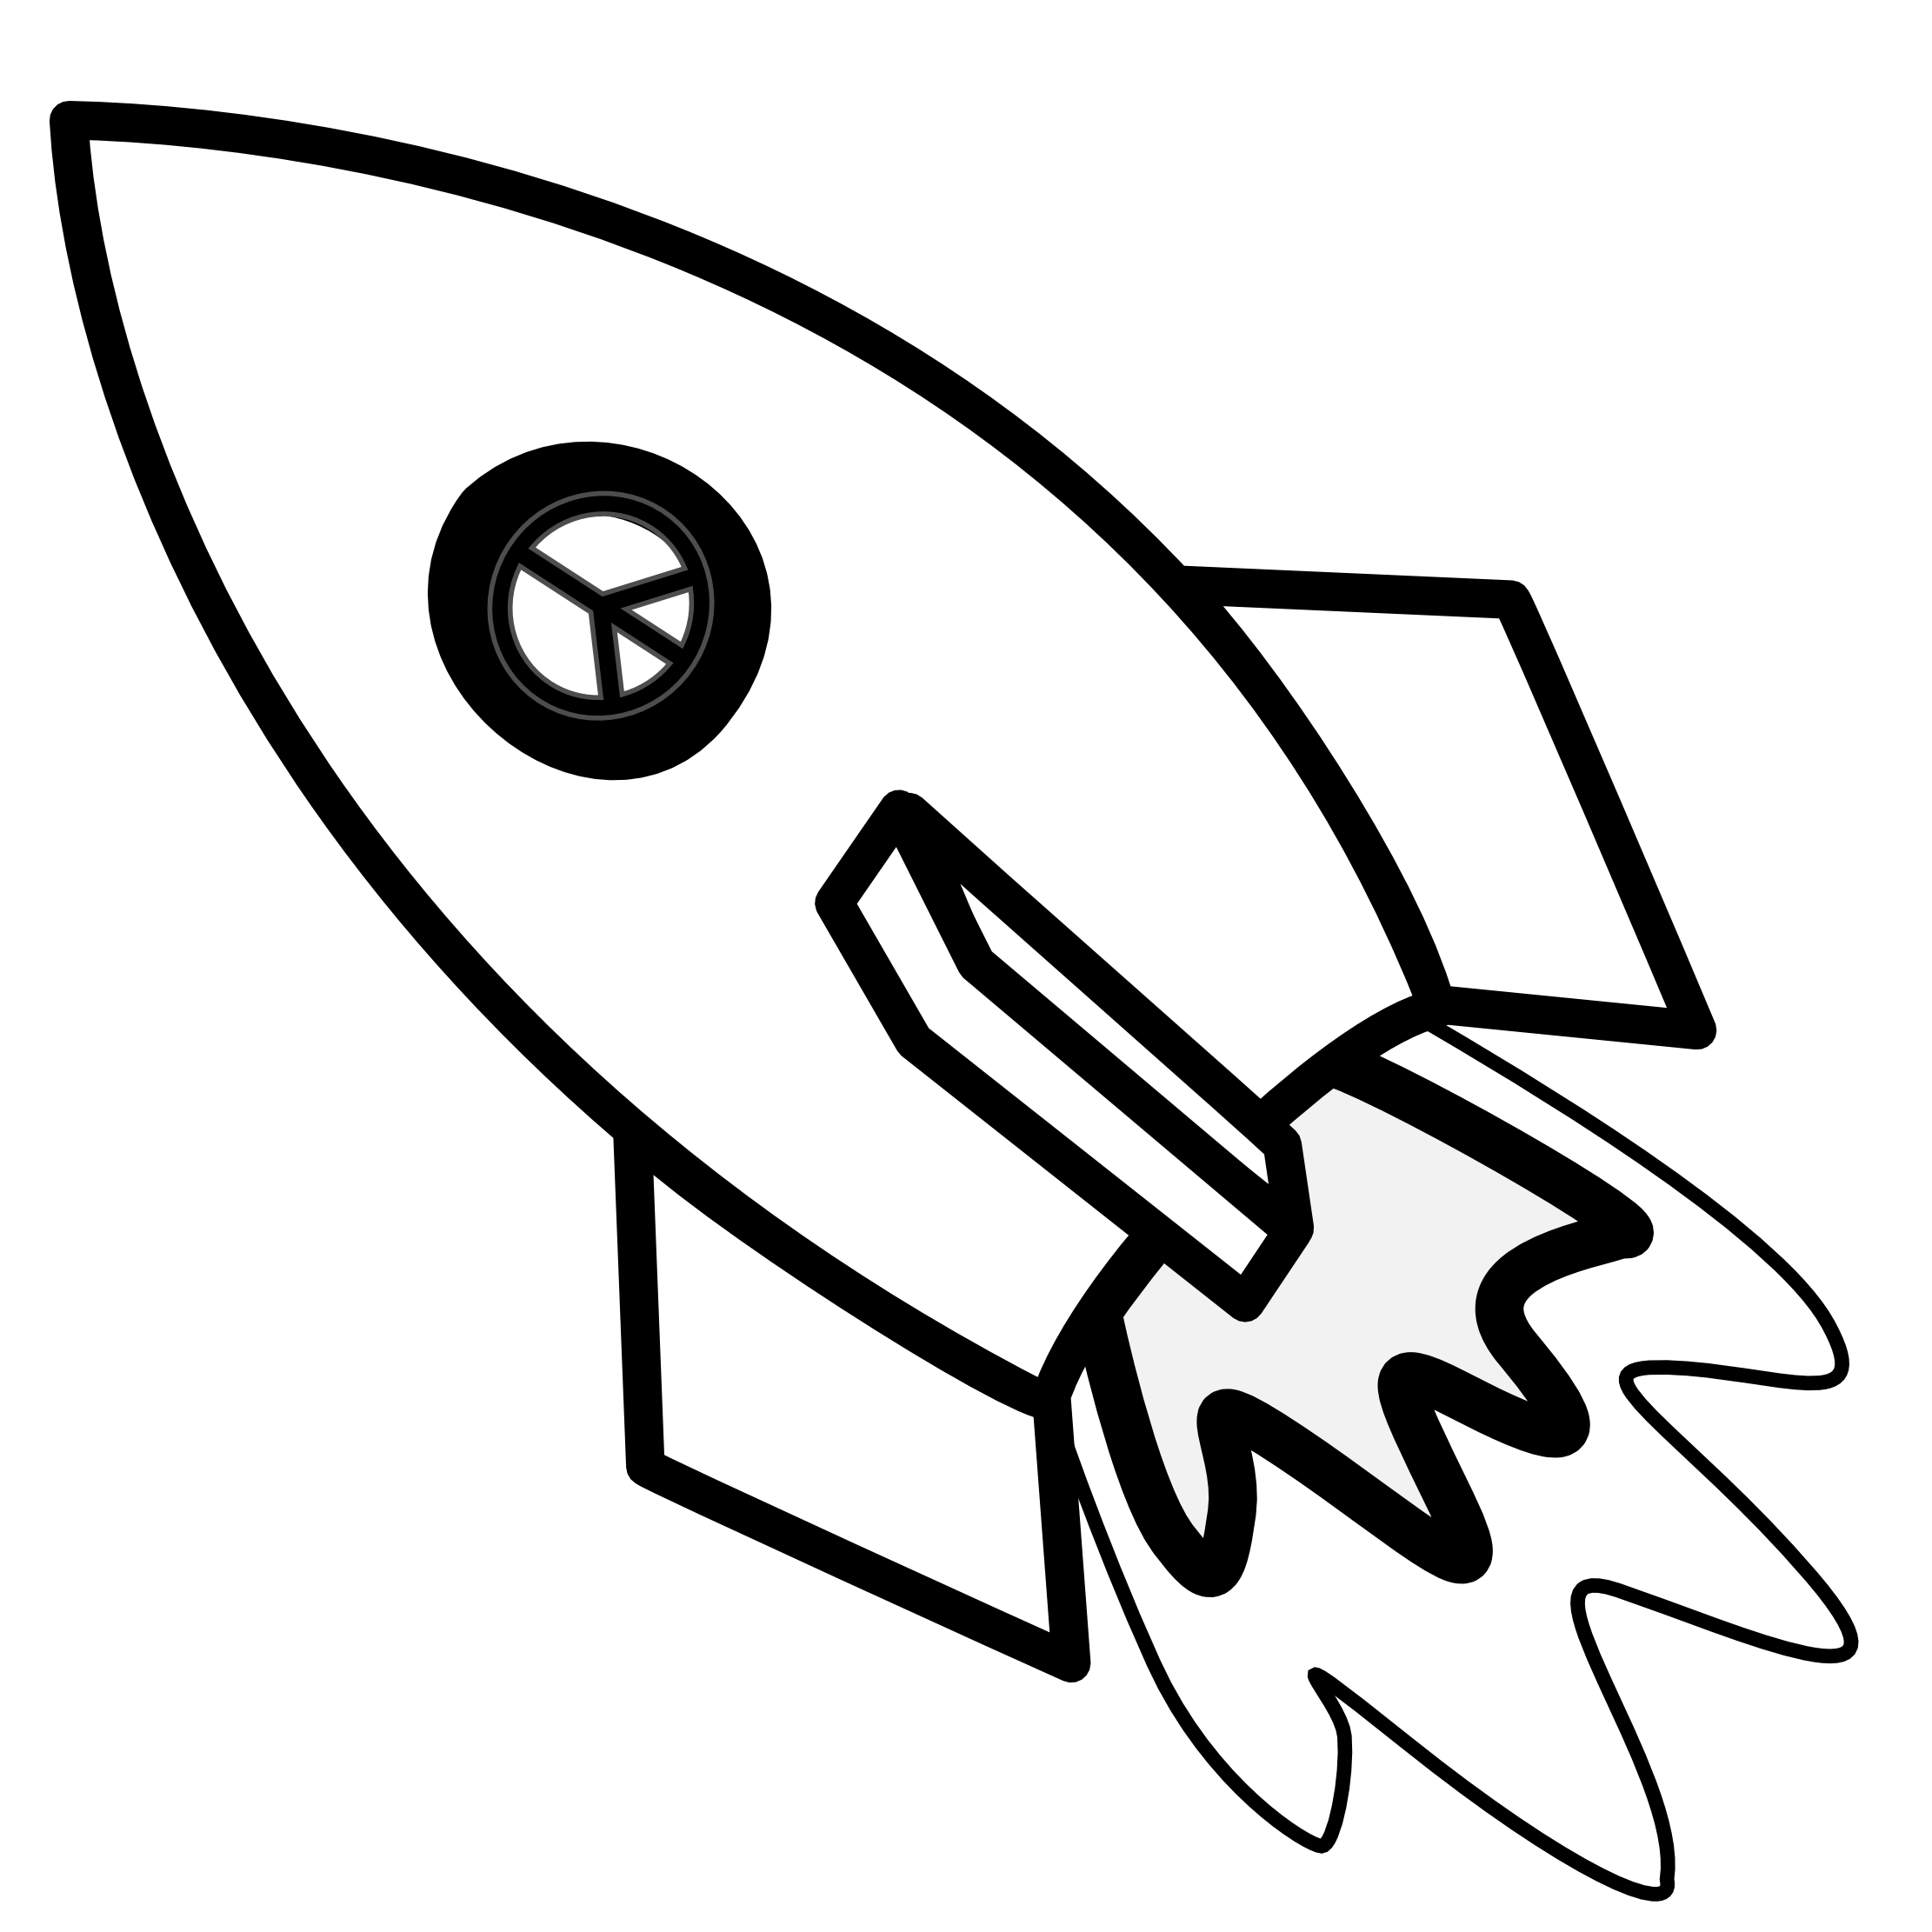 Spaceship clipart easy cartoon. Rocket black and white